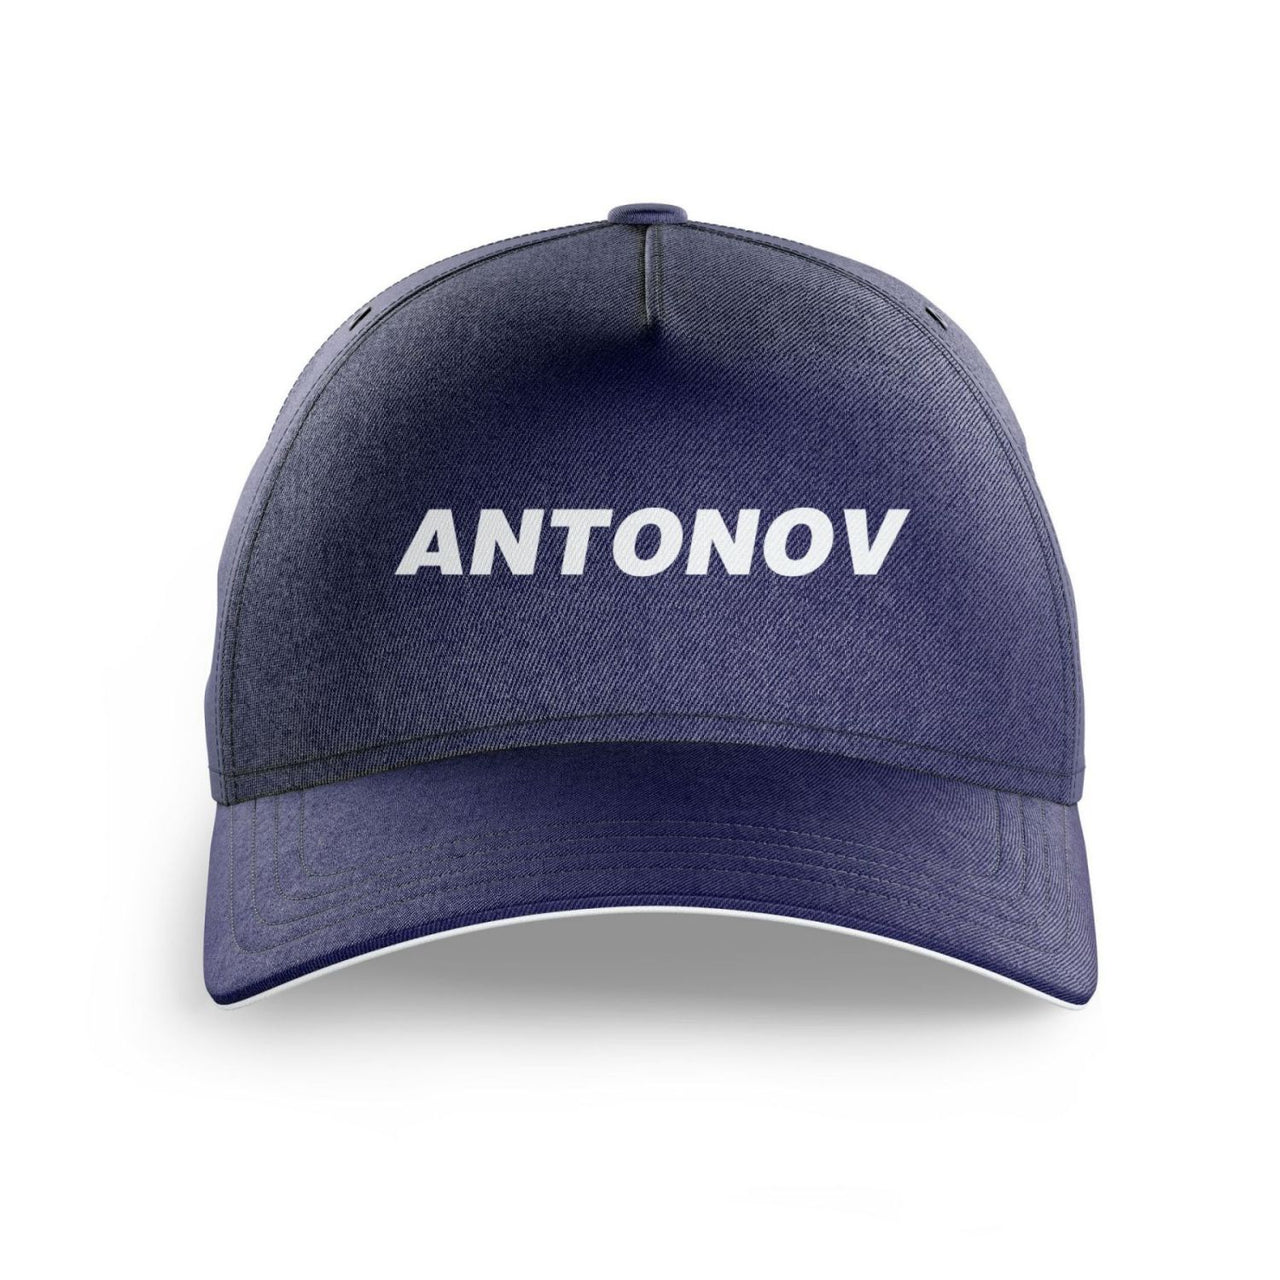 Antonov & Text Printed Hats